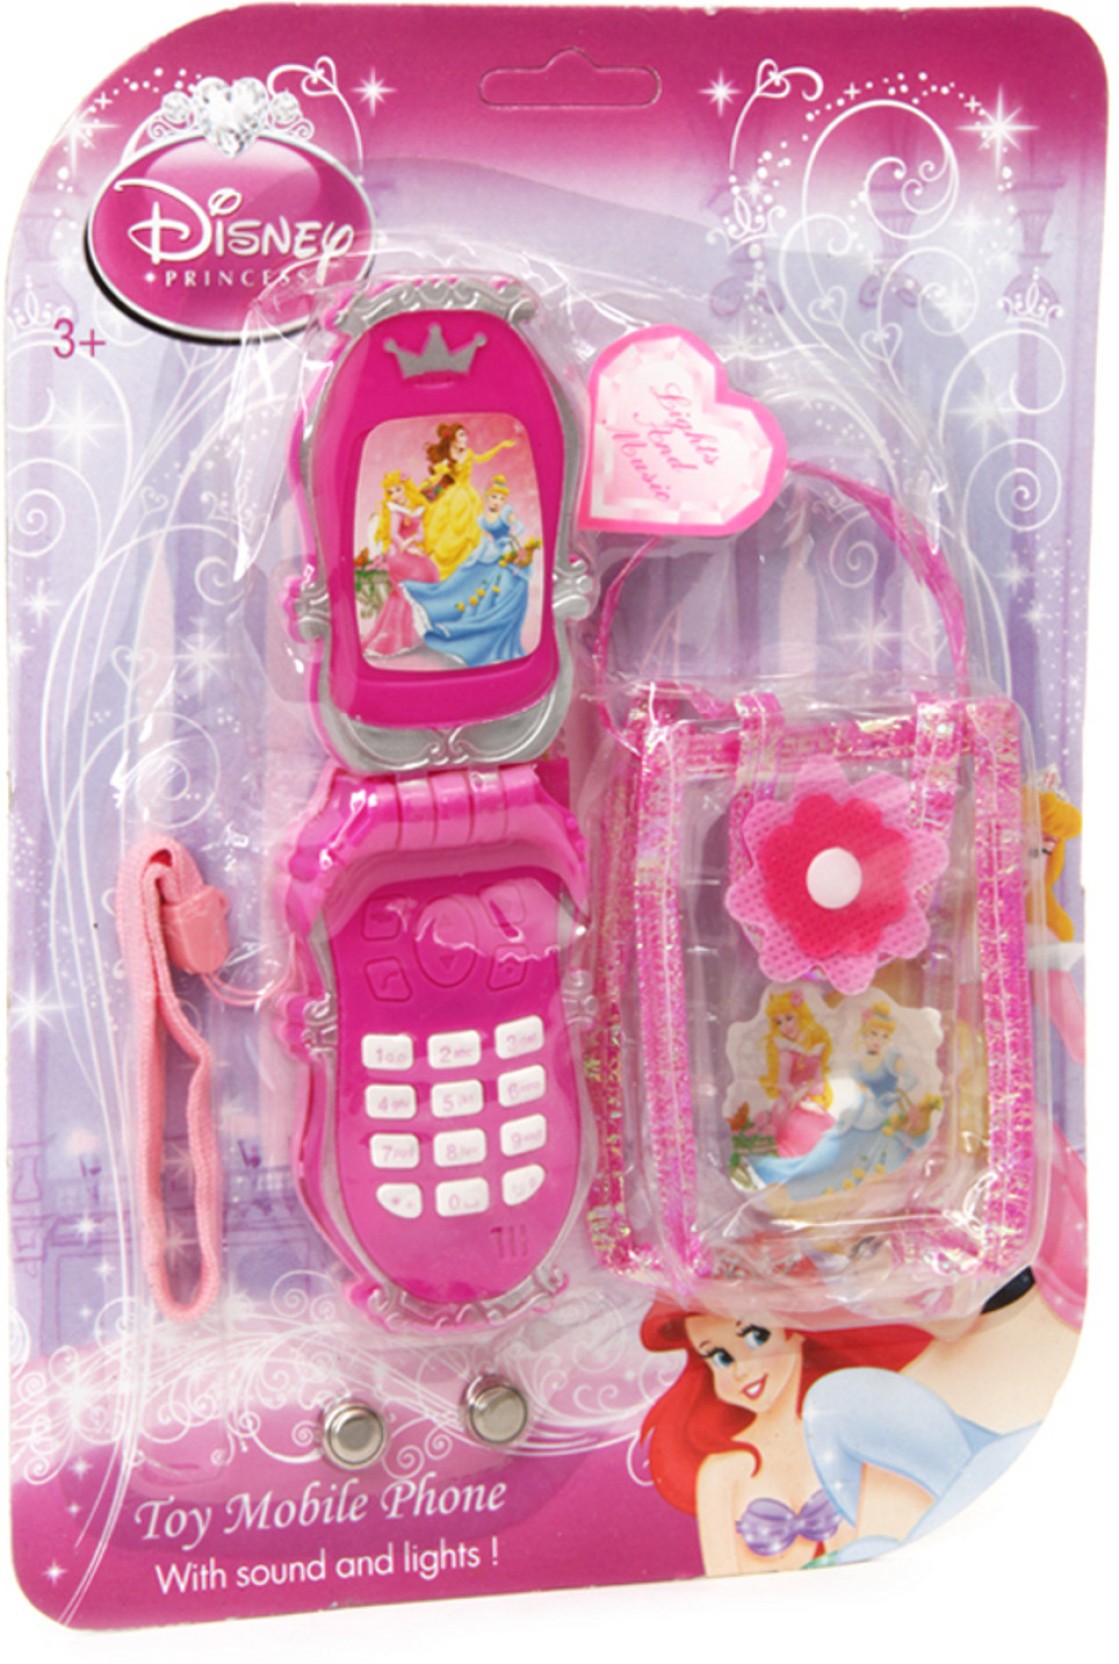 Disney Princess Mobile Phone Princess Mobile Phone . Buy